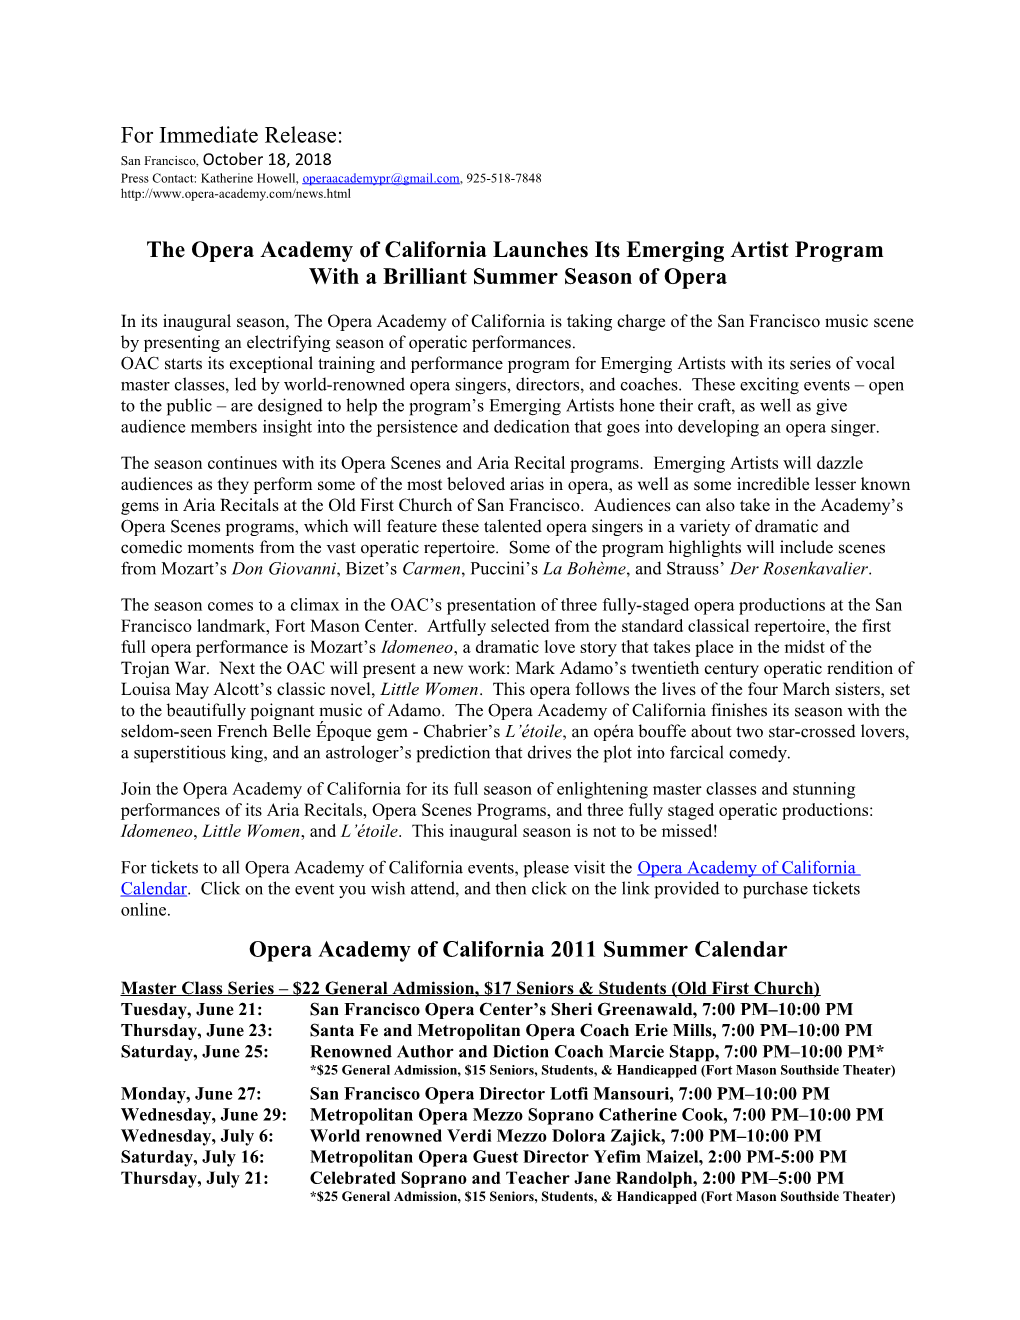 The Opera Academy of California Launches Itsemerging Artist Program